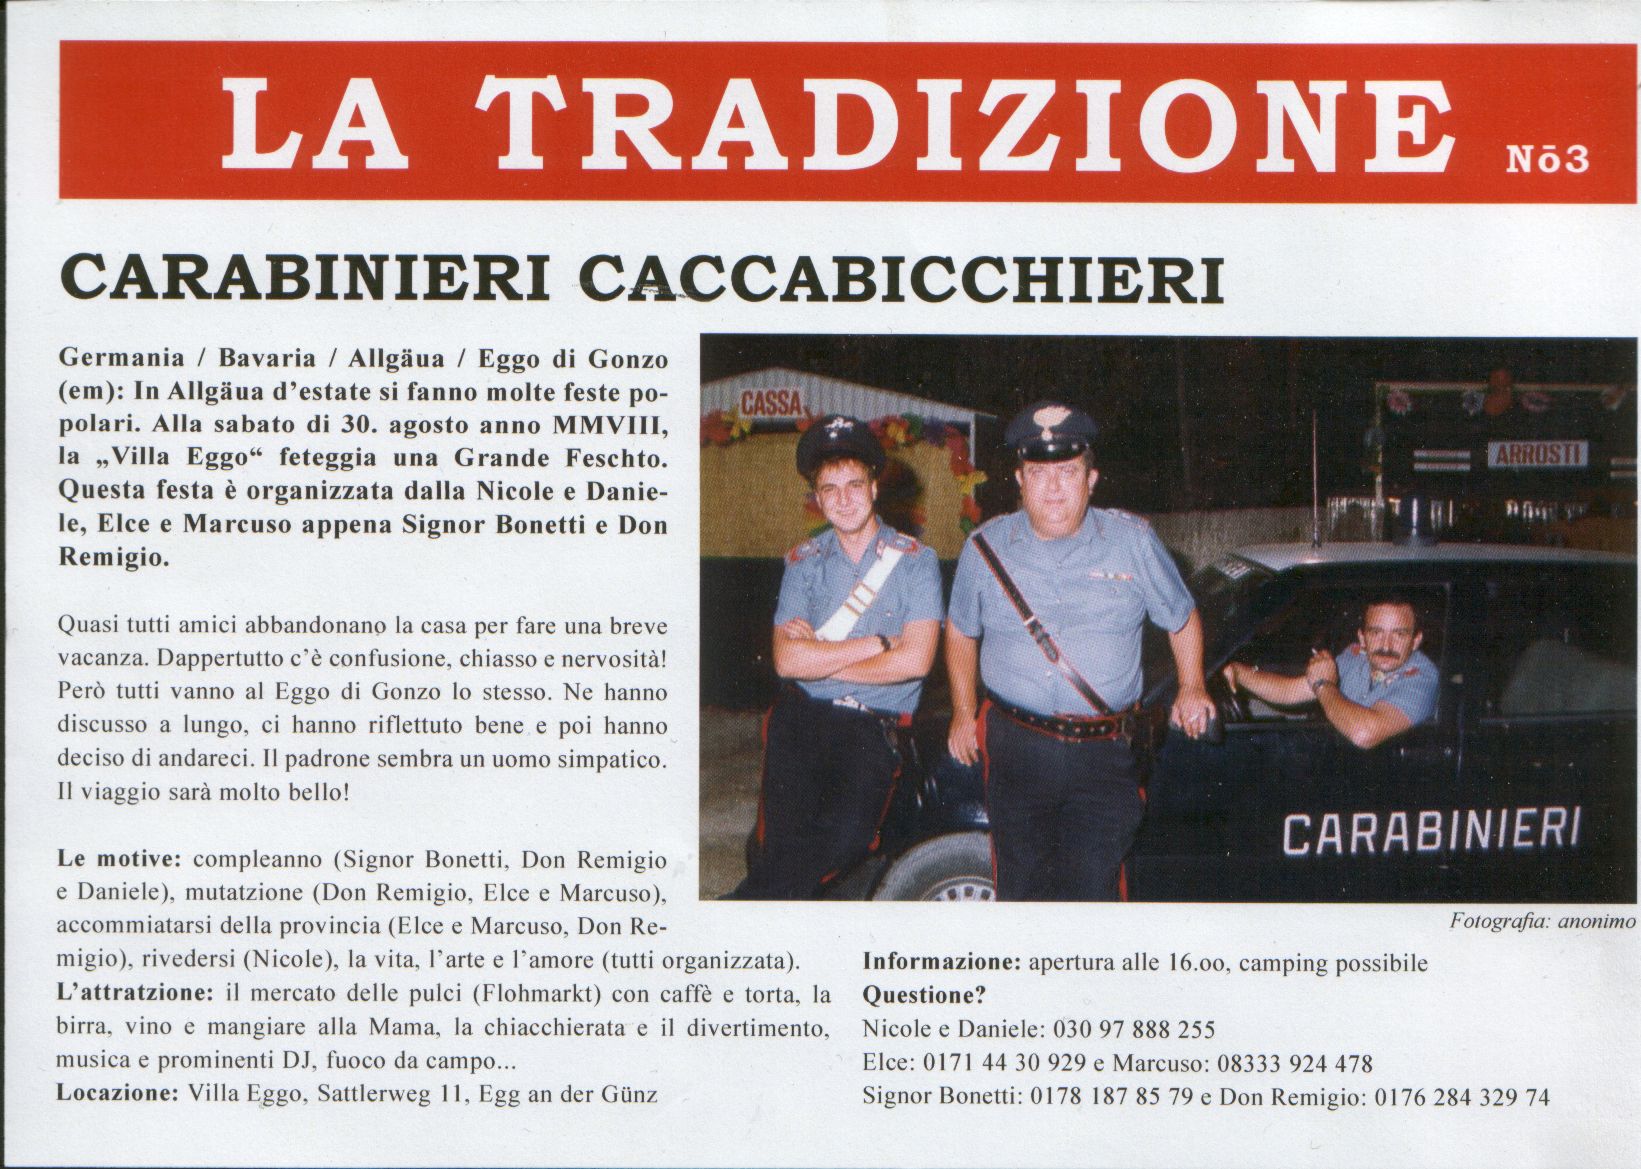 Carabinieri Caccabicchieri